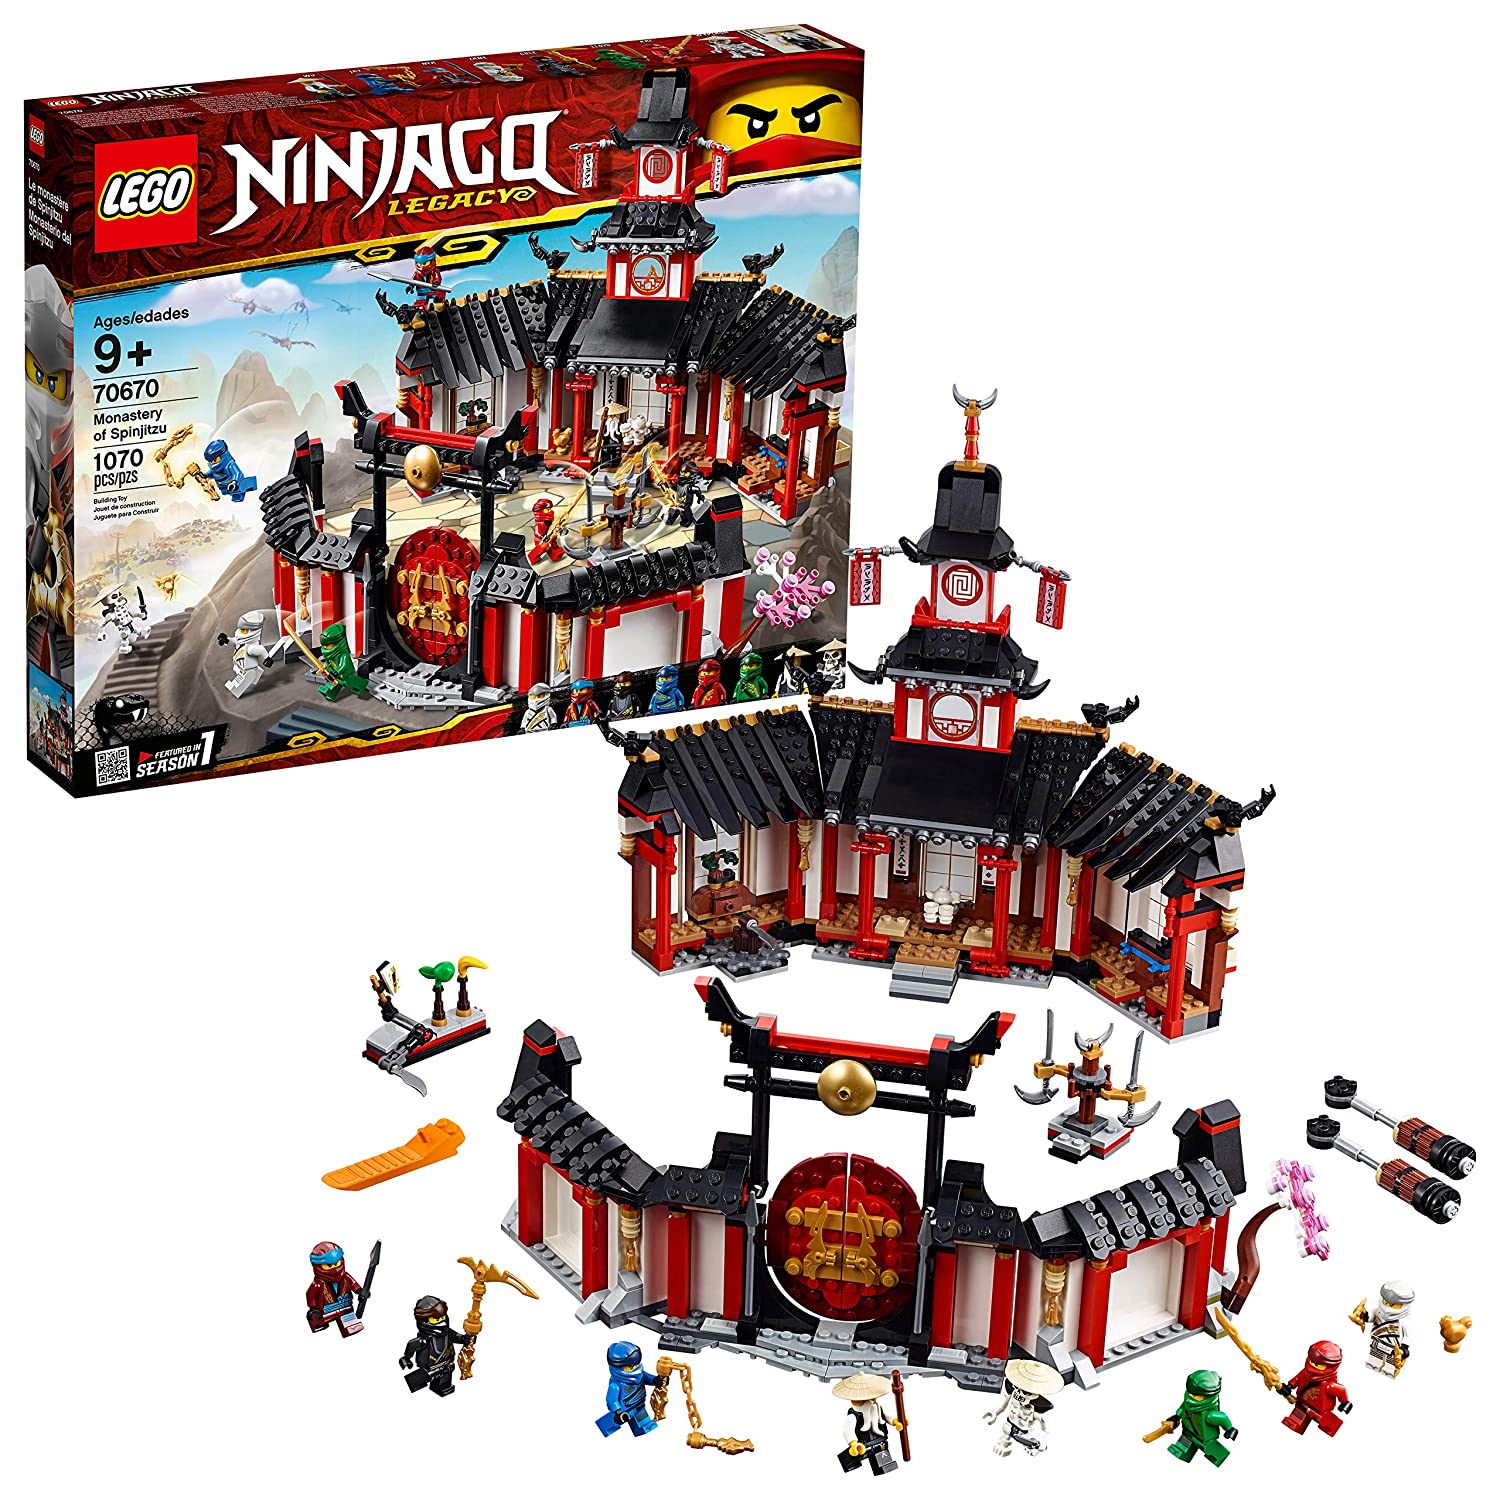 LEGO NINJAGO Legacy Monastery of Spinjitzu 70670 Building Kit, New 2019 (1070 Pieces)